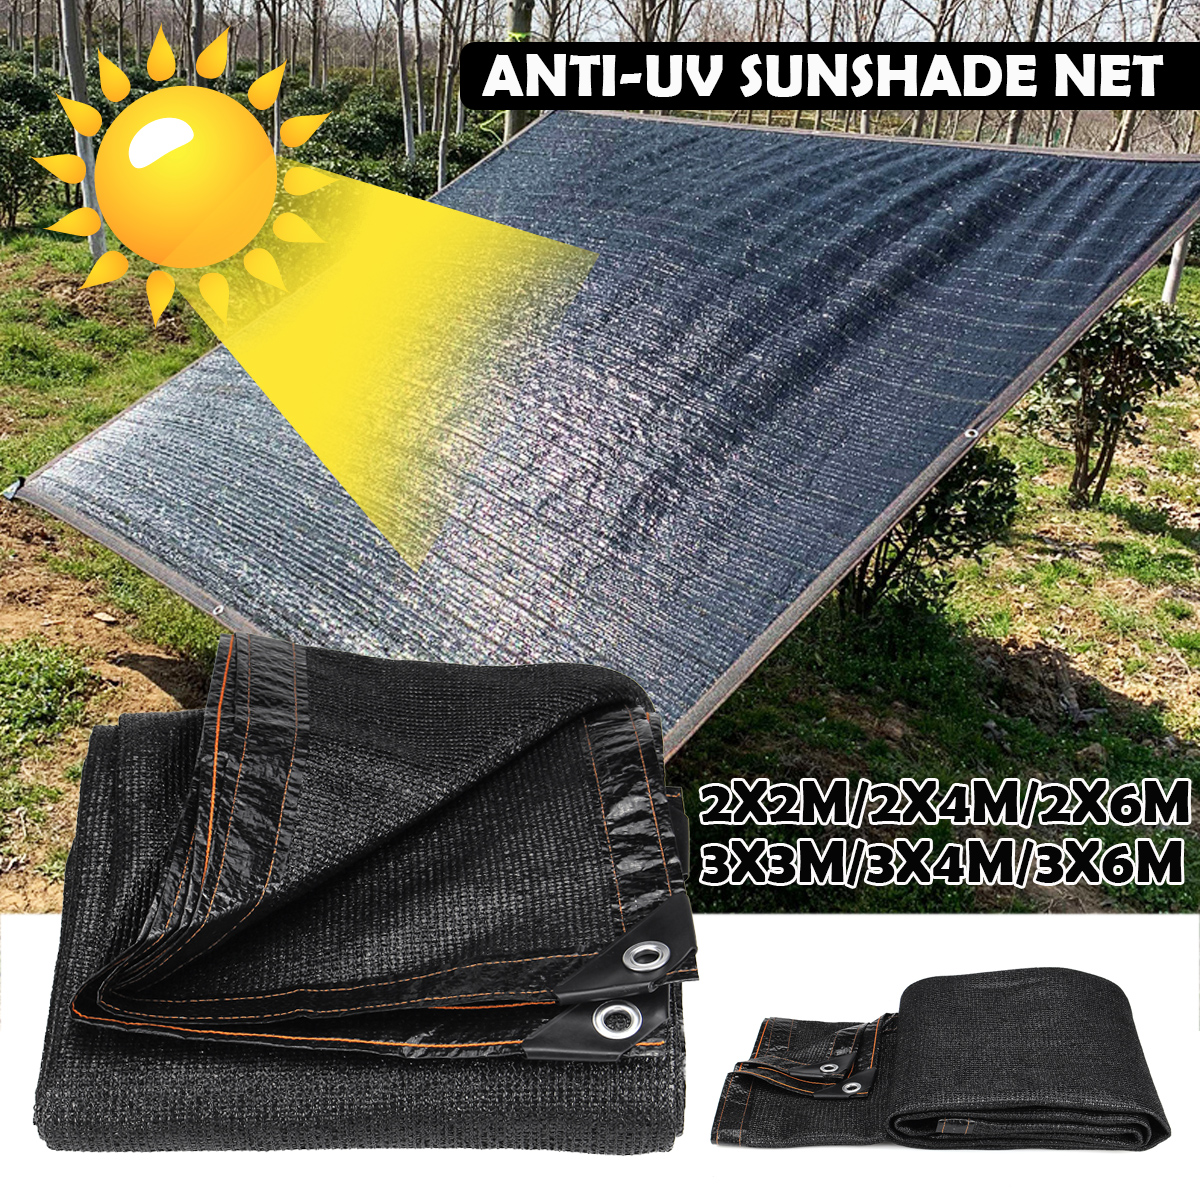 Anti-UV-Sunshade-Net-Garden-Sunscreen-Sunblock-Shade-Cloth-Net-Plant-Greenhouse-Cover-Outdoor-Car-Co-1611706-1